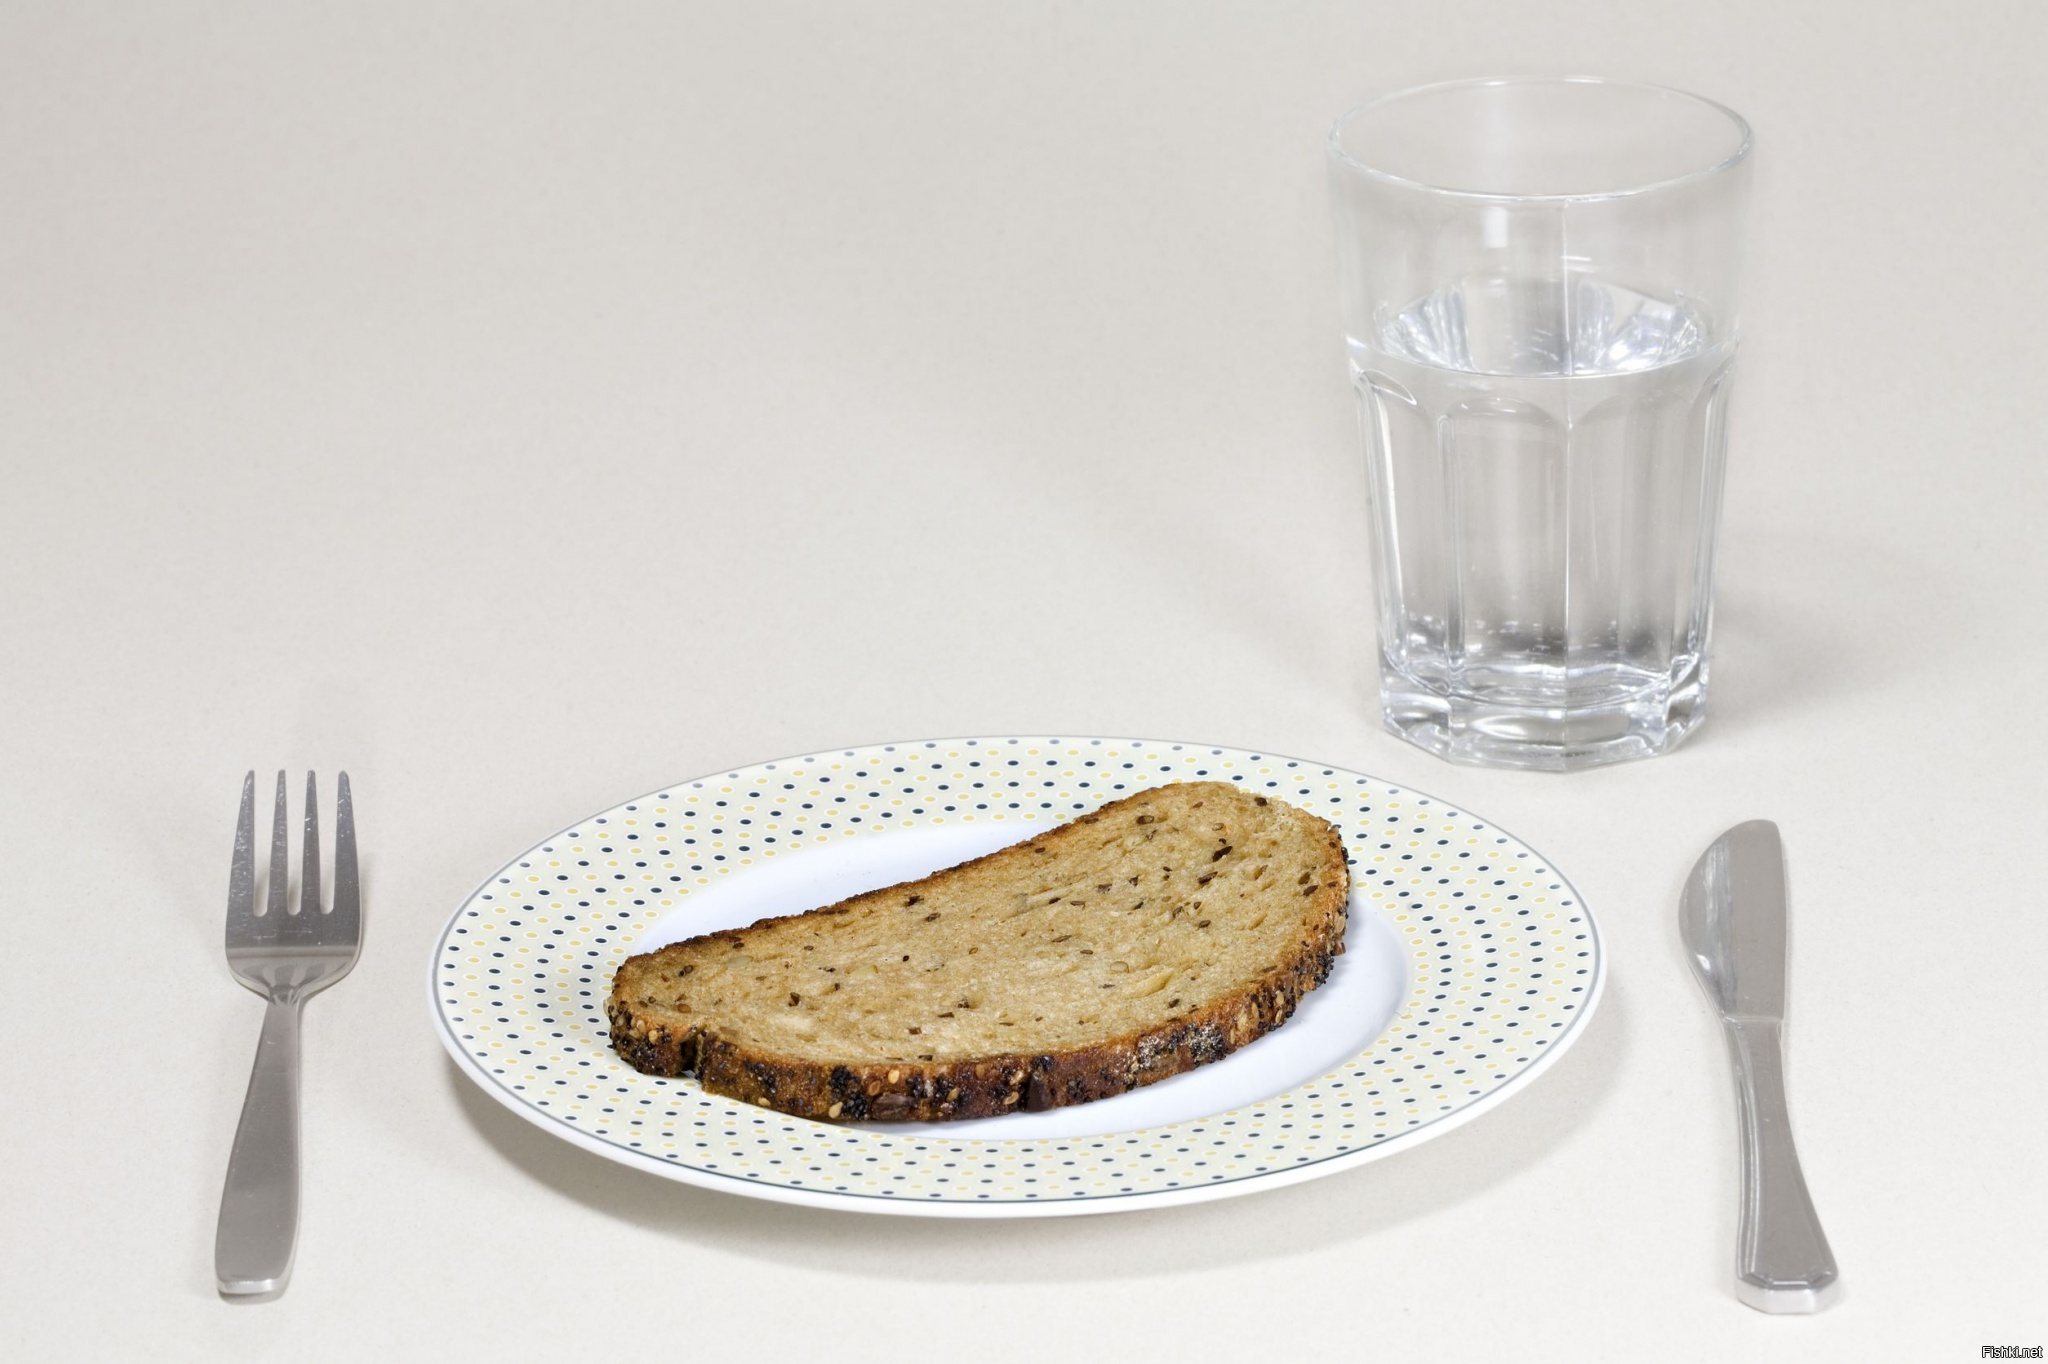 Ставят стакан воды и хлеб. Хлеб и вода. Стакан воды с хлебом. Стакан воды и кусок хлеба. Кусочек хлеба и вода.